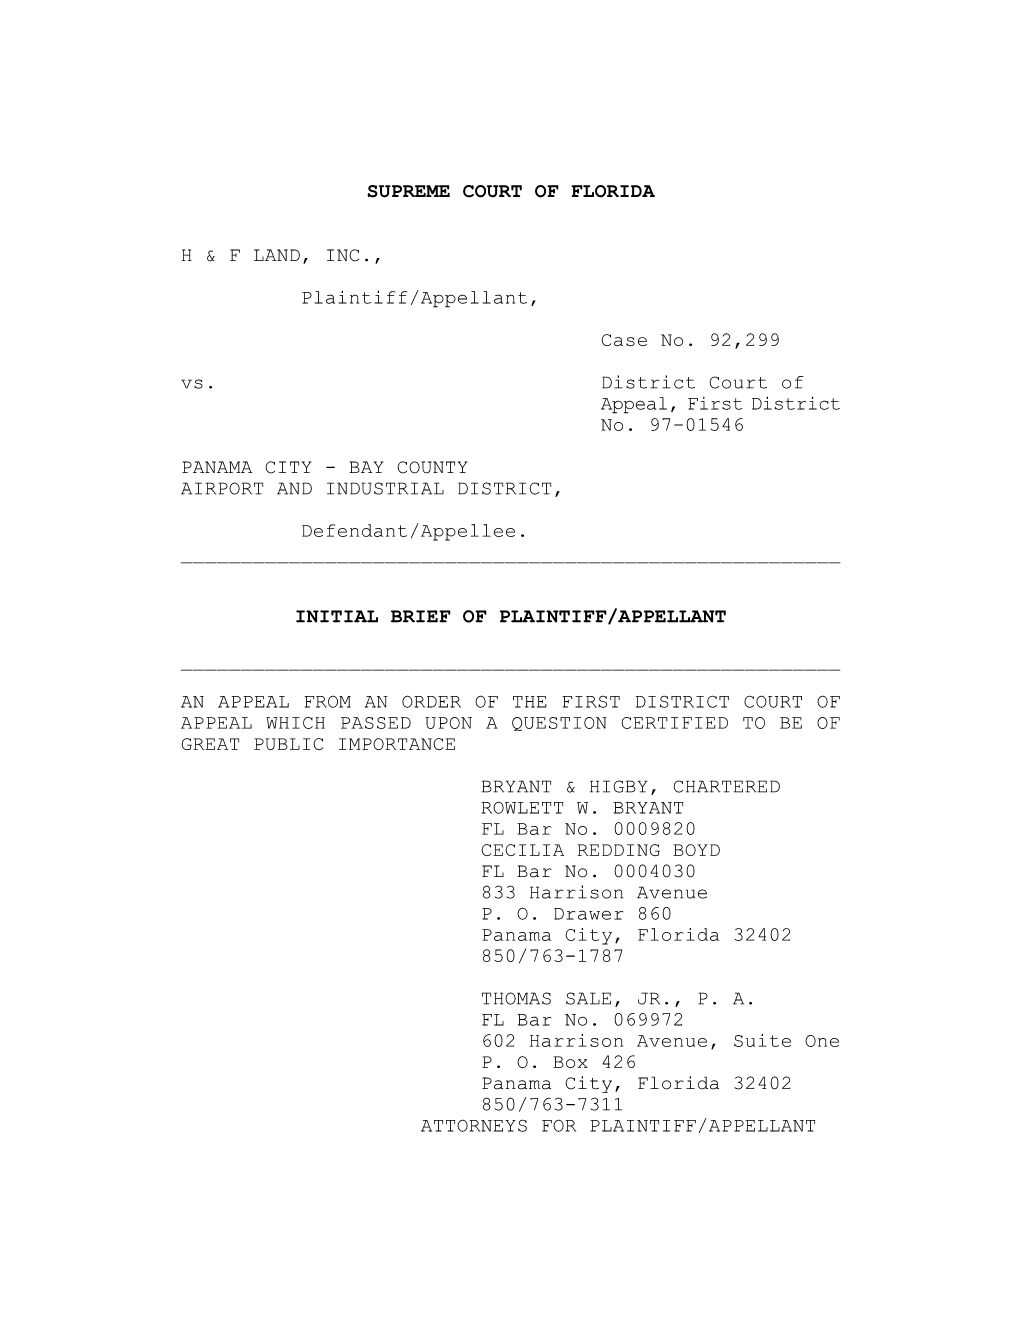 SUPREME COURT of FLORIDA H & F LAND, INC., Plaintiff/Appellant